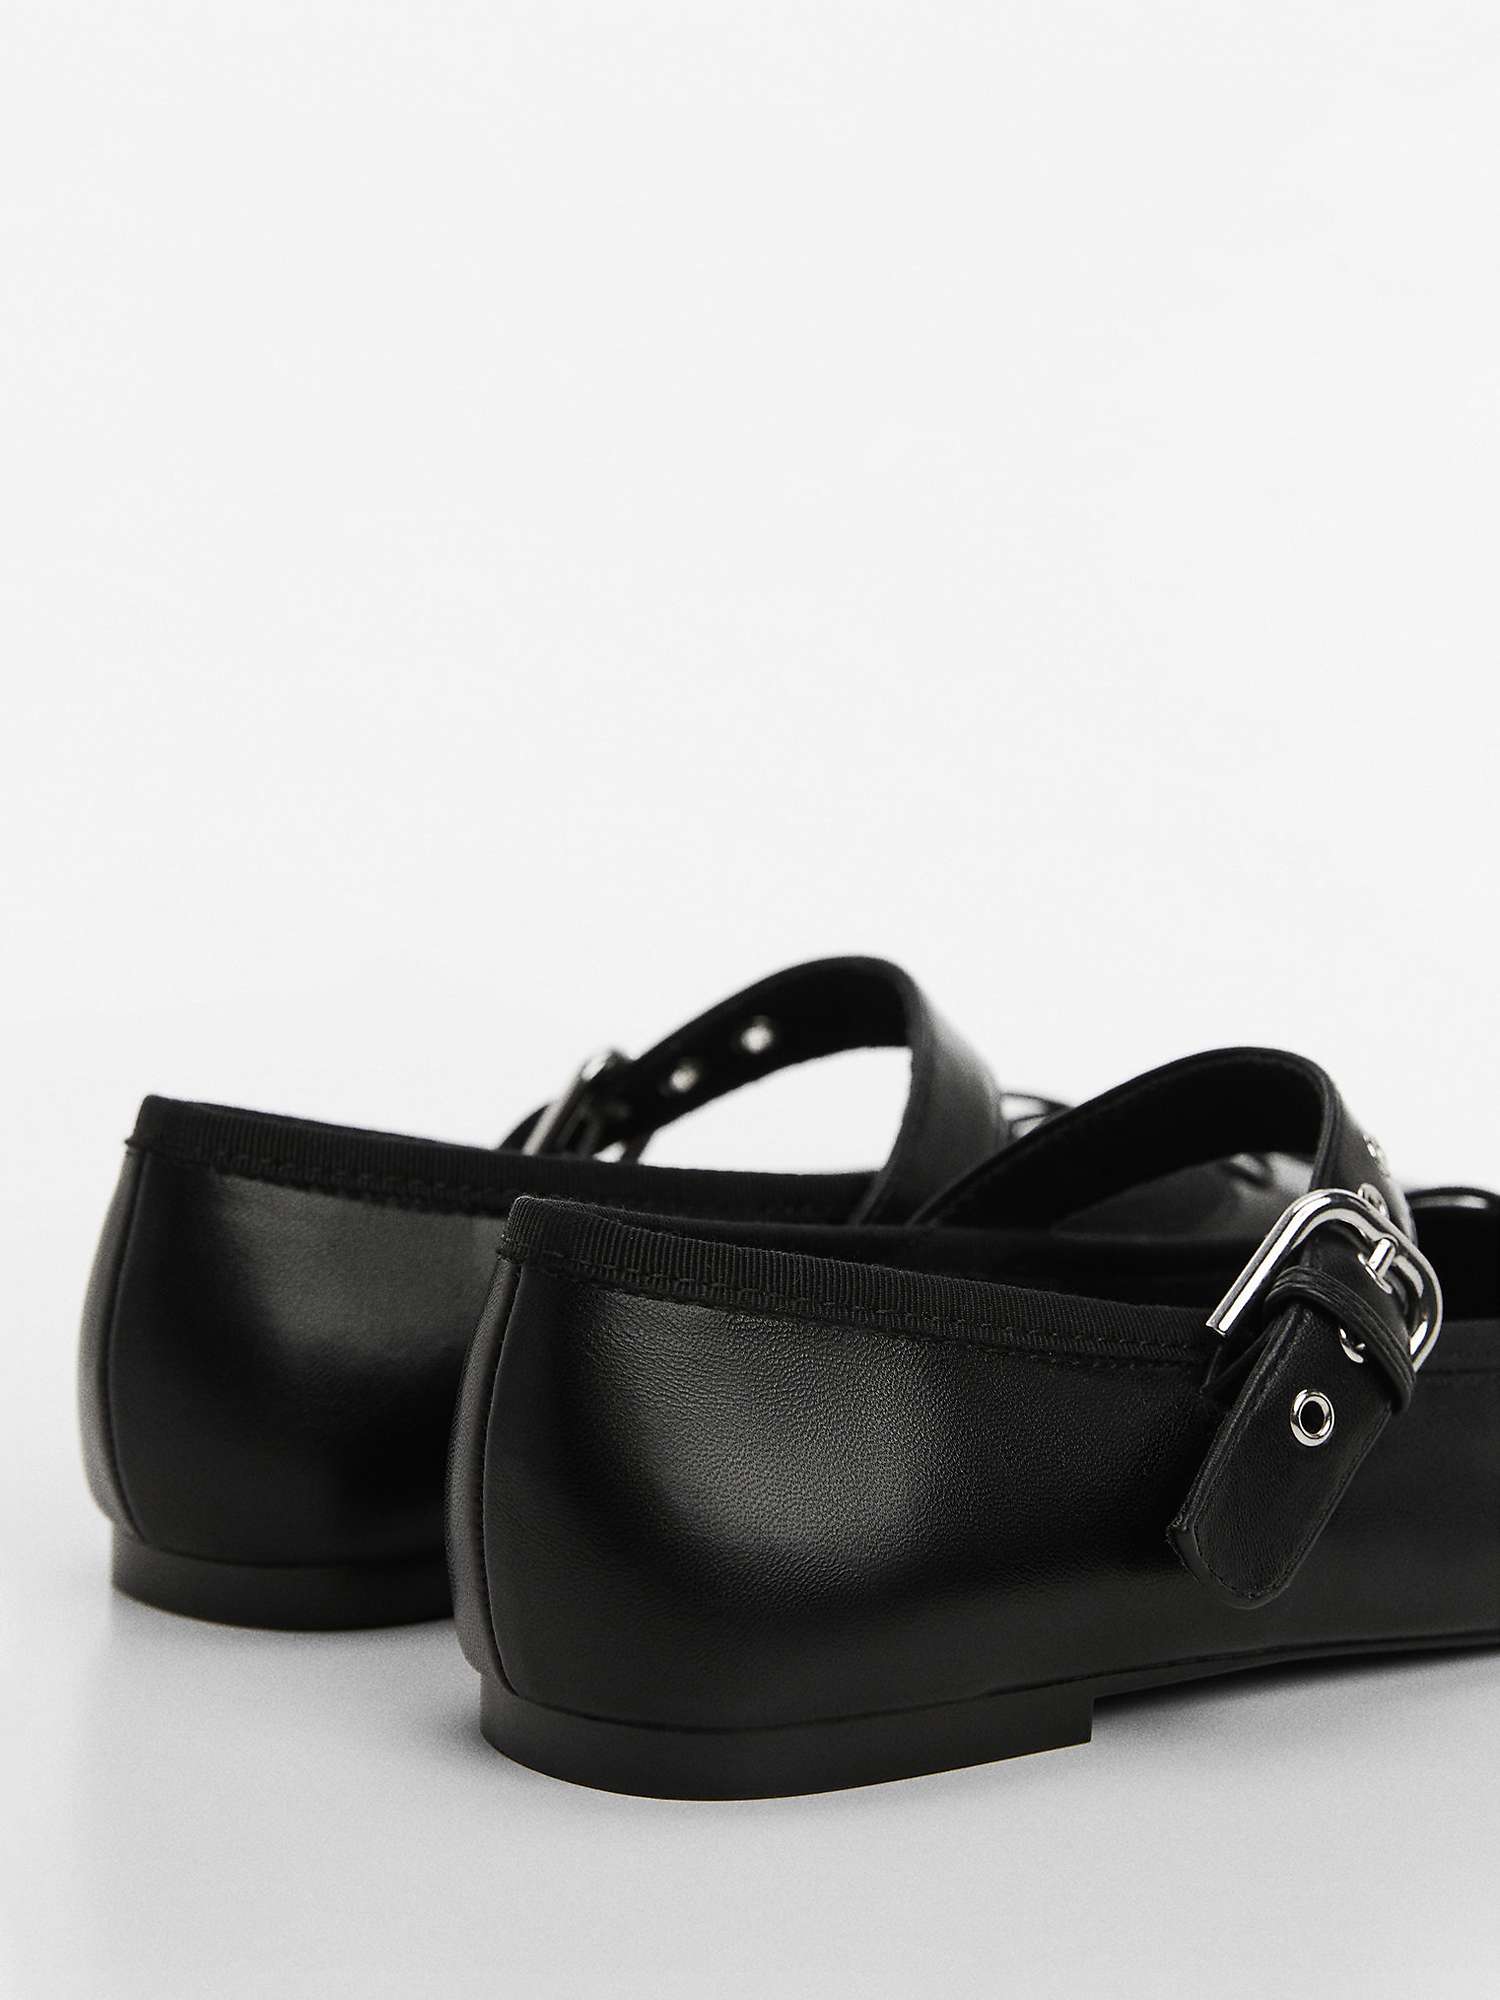 Buy Mango Buckle Ballet Shoes, Black Online at johnlewis.com